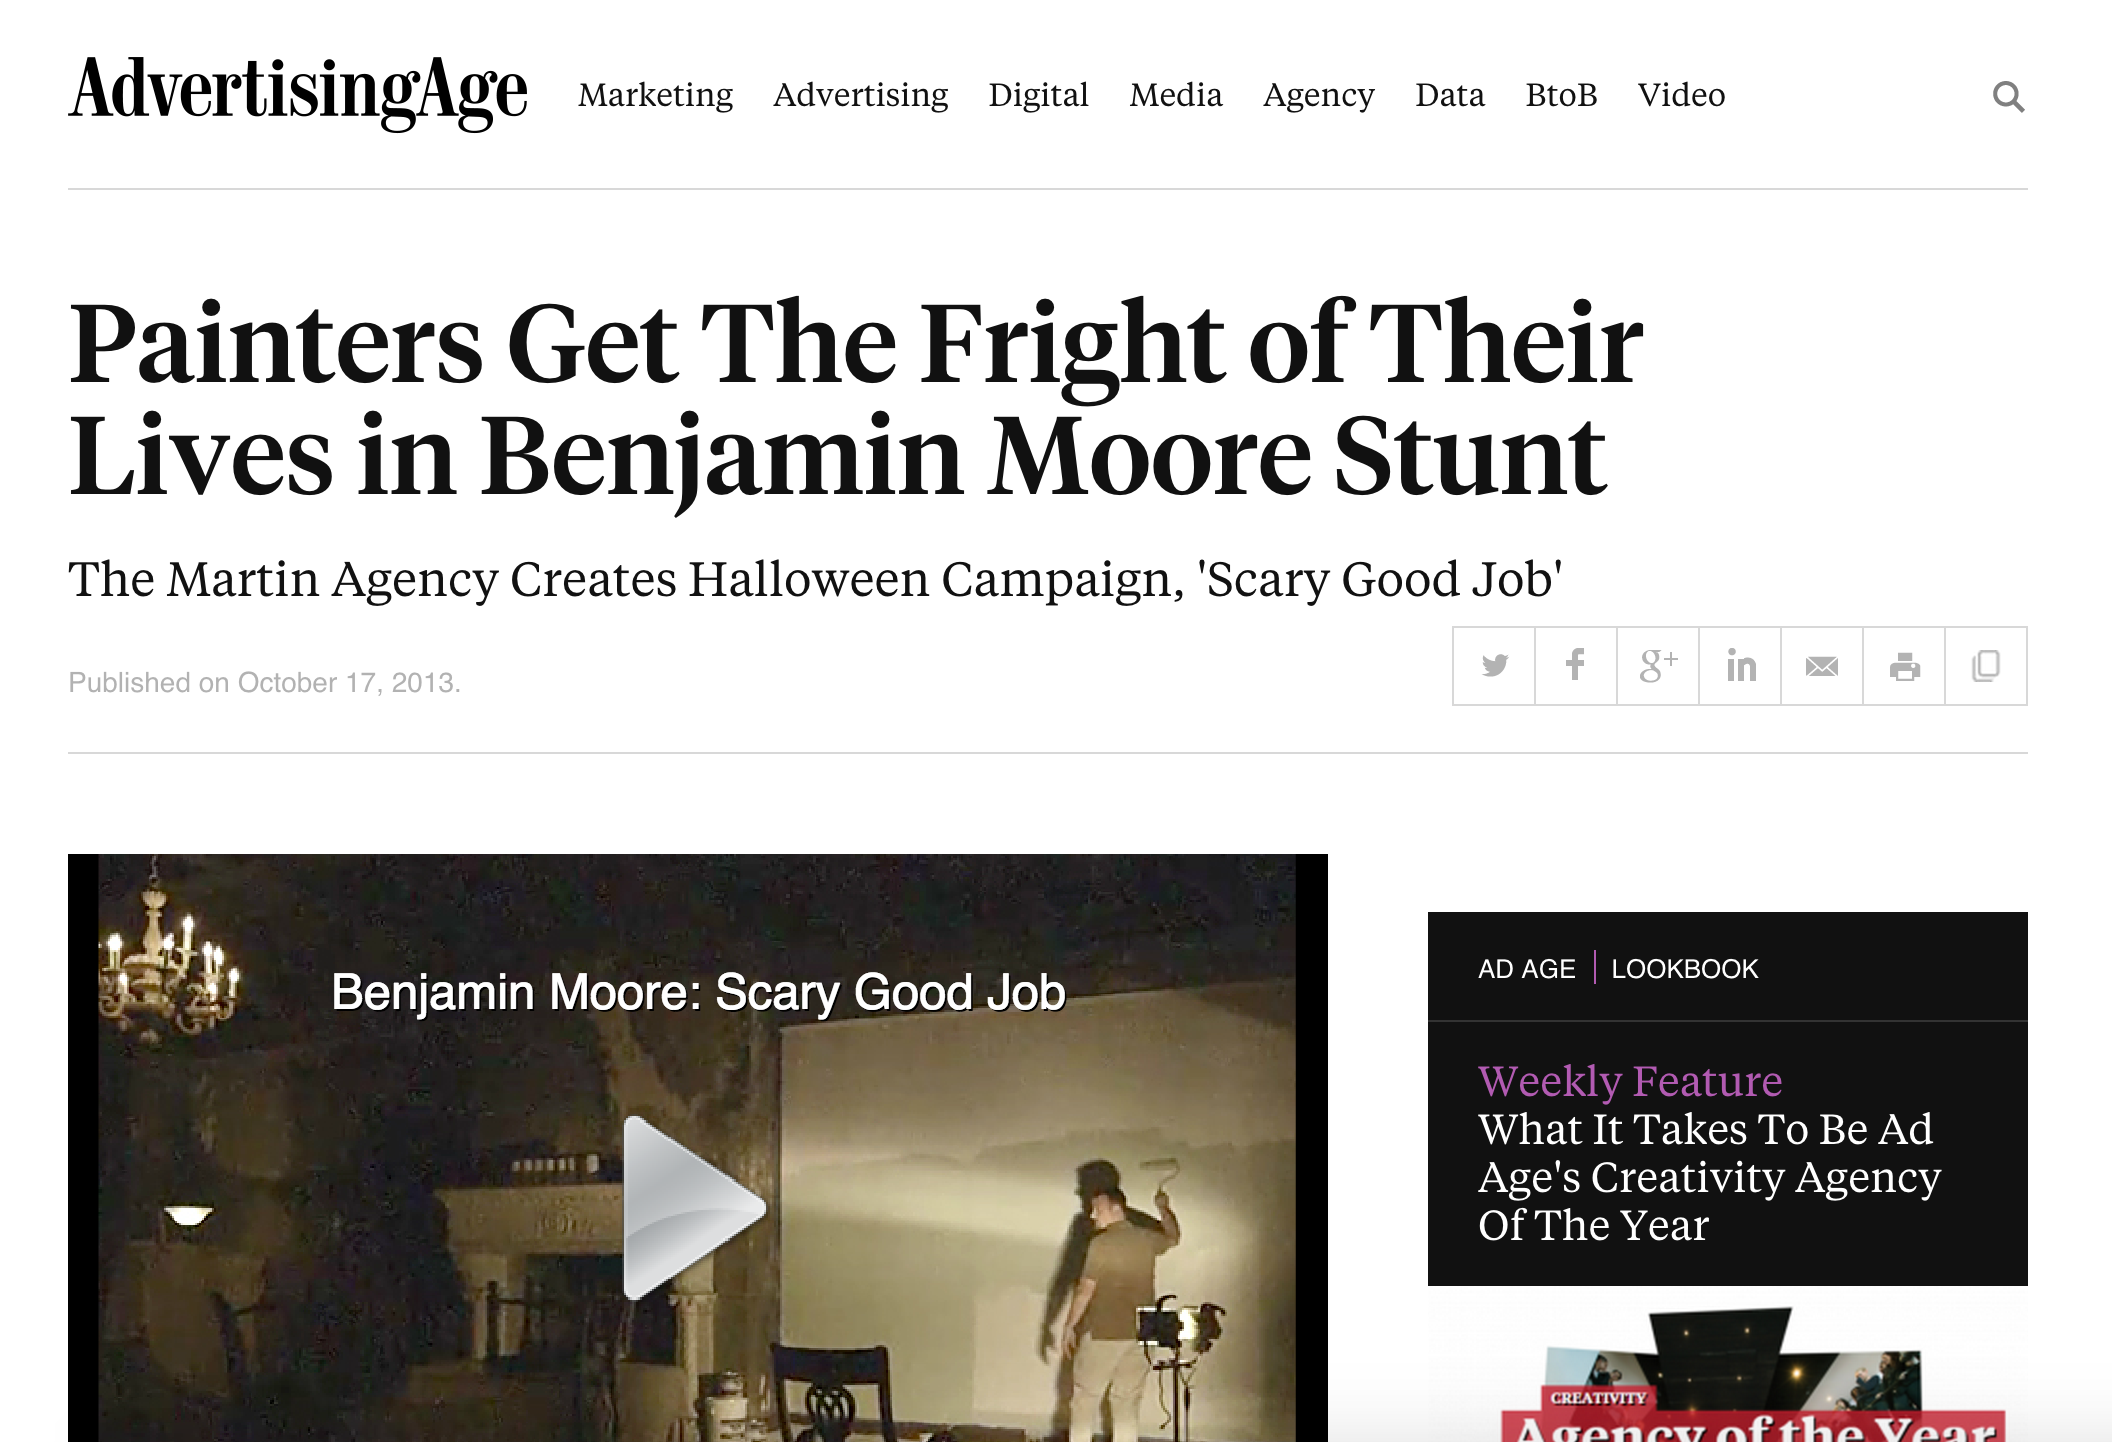 Painters Get The Fright in Benjamin Moore Stunt